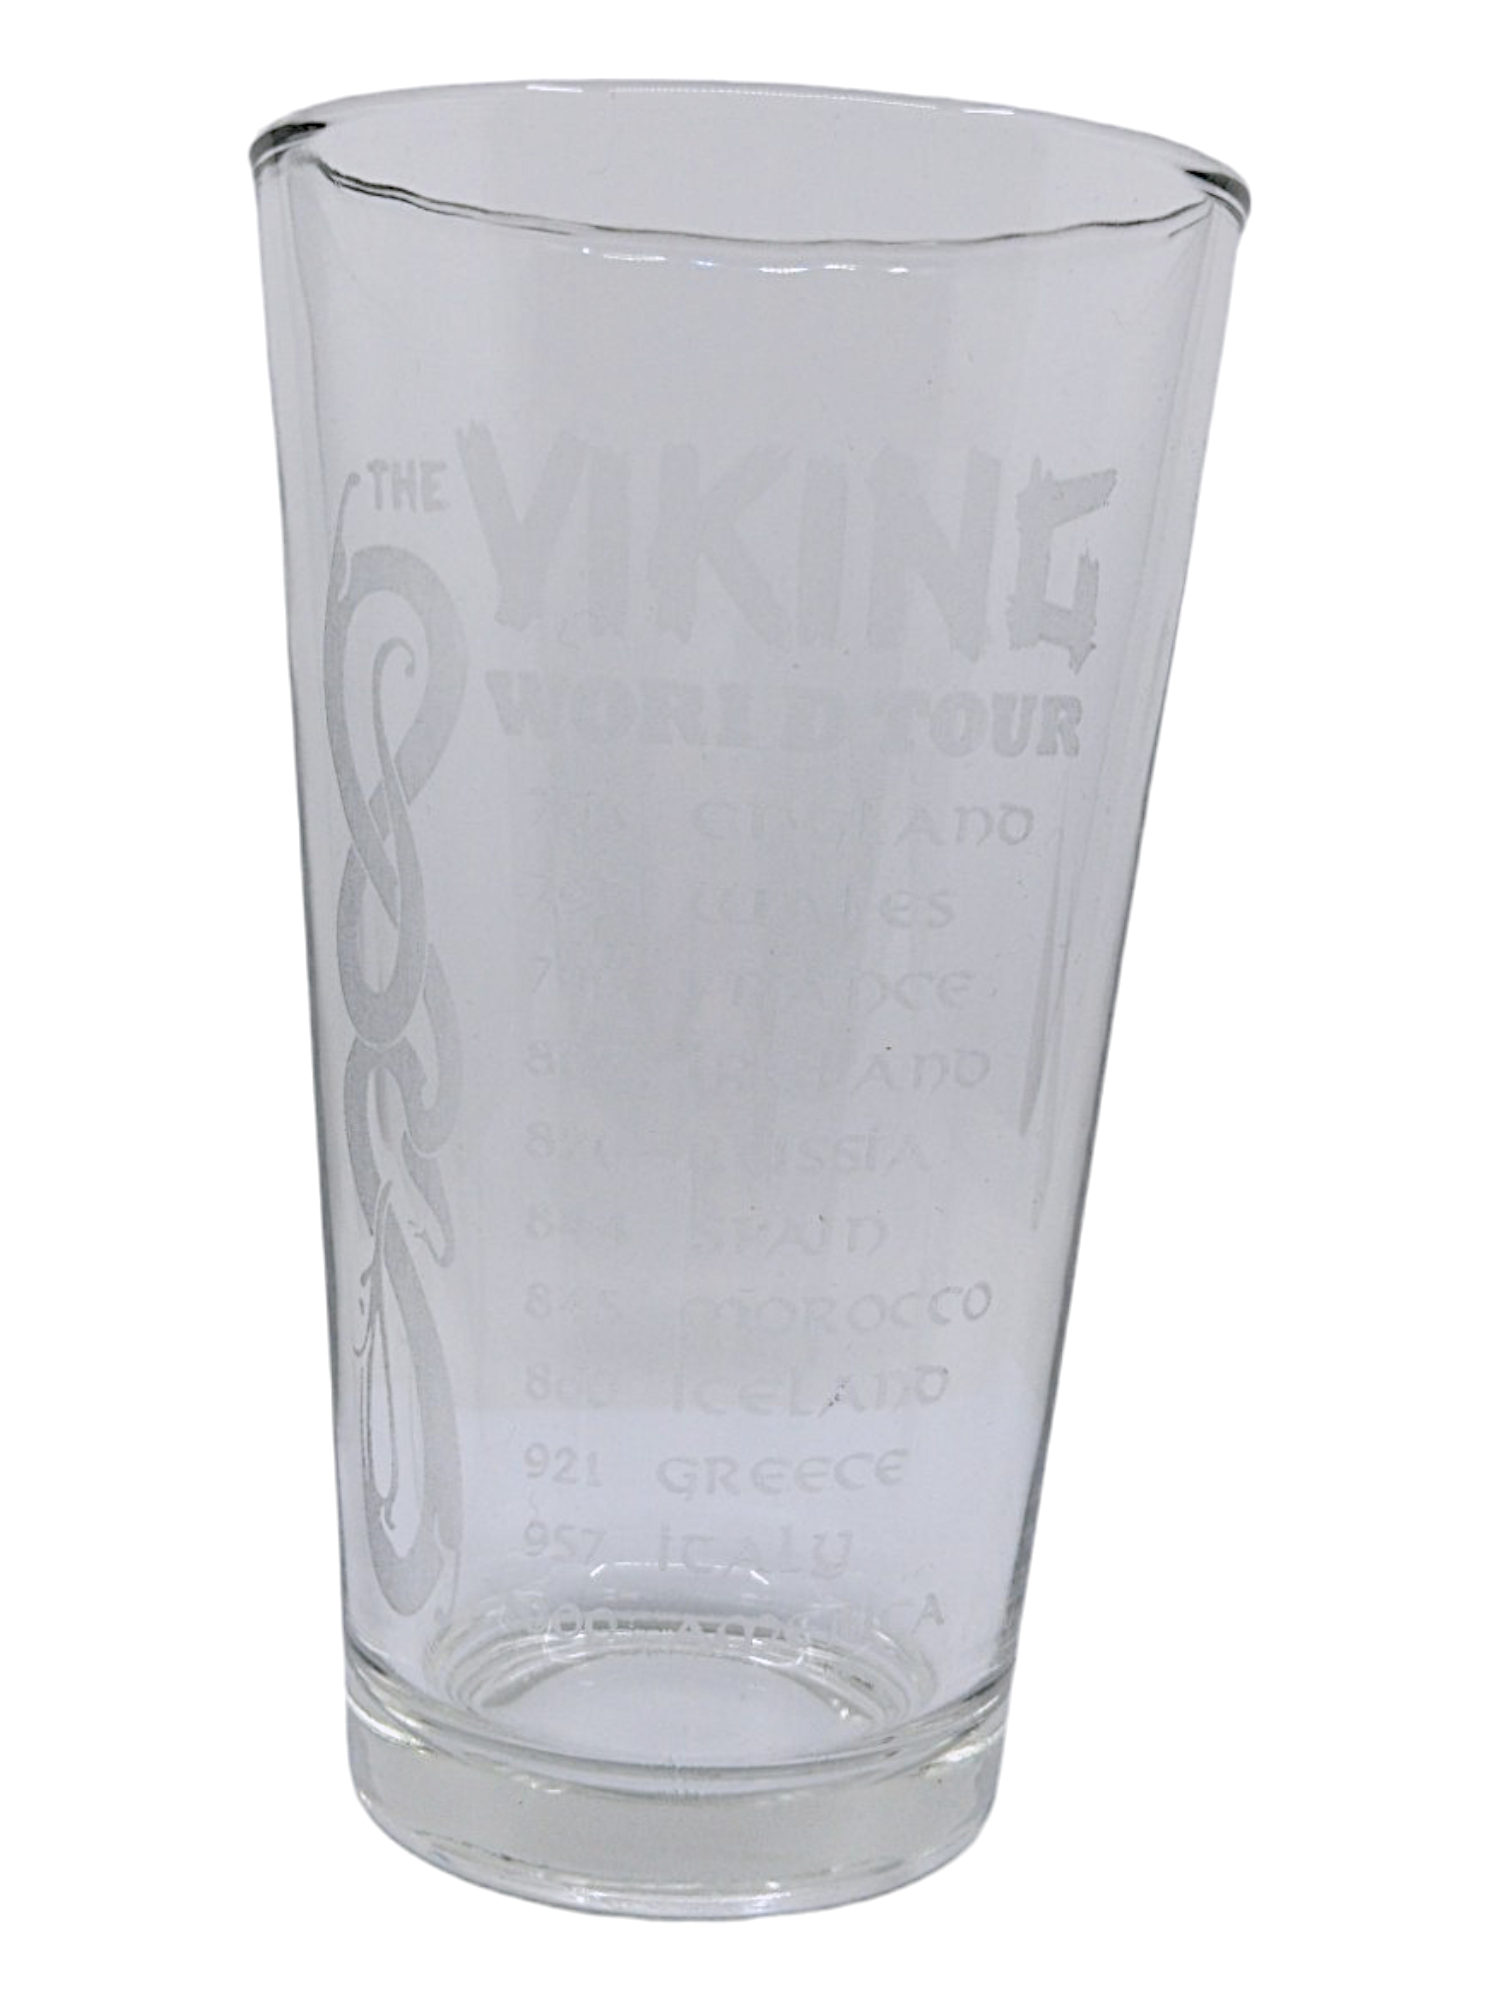 Drinkware: "Viking World Tour", 16oz Pint Glass